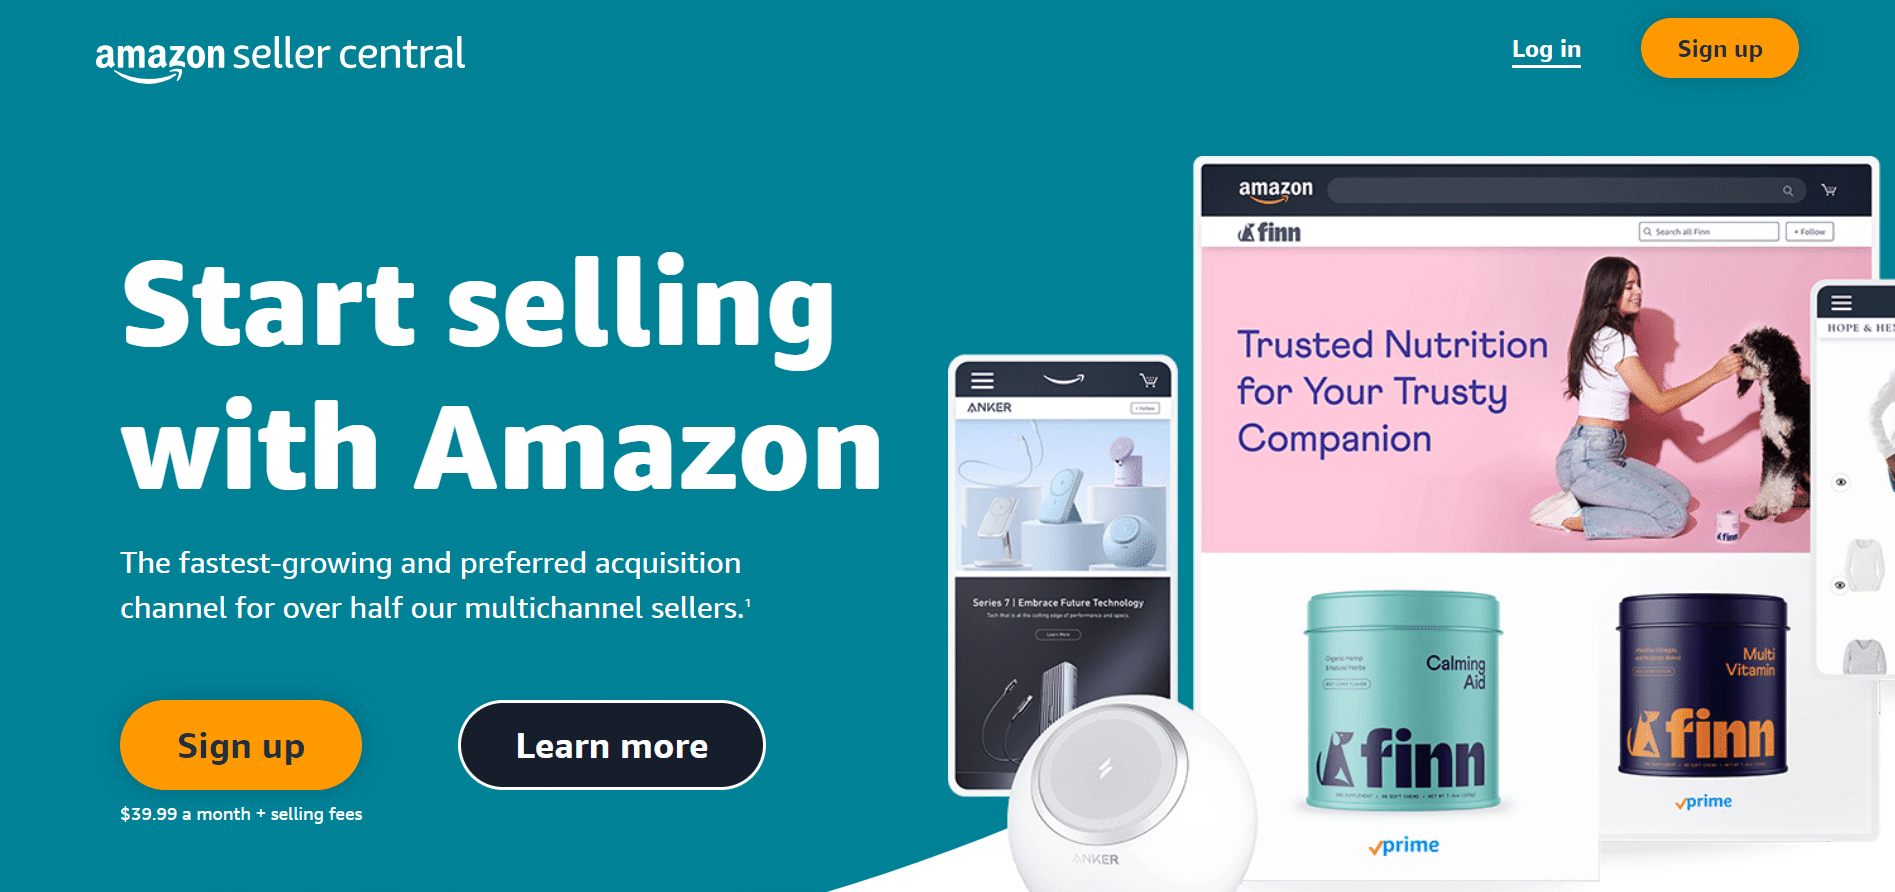 Amazon Seller Center website